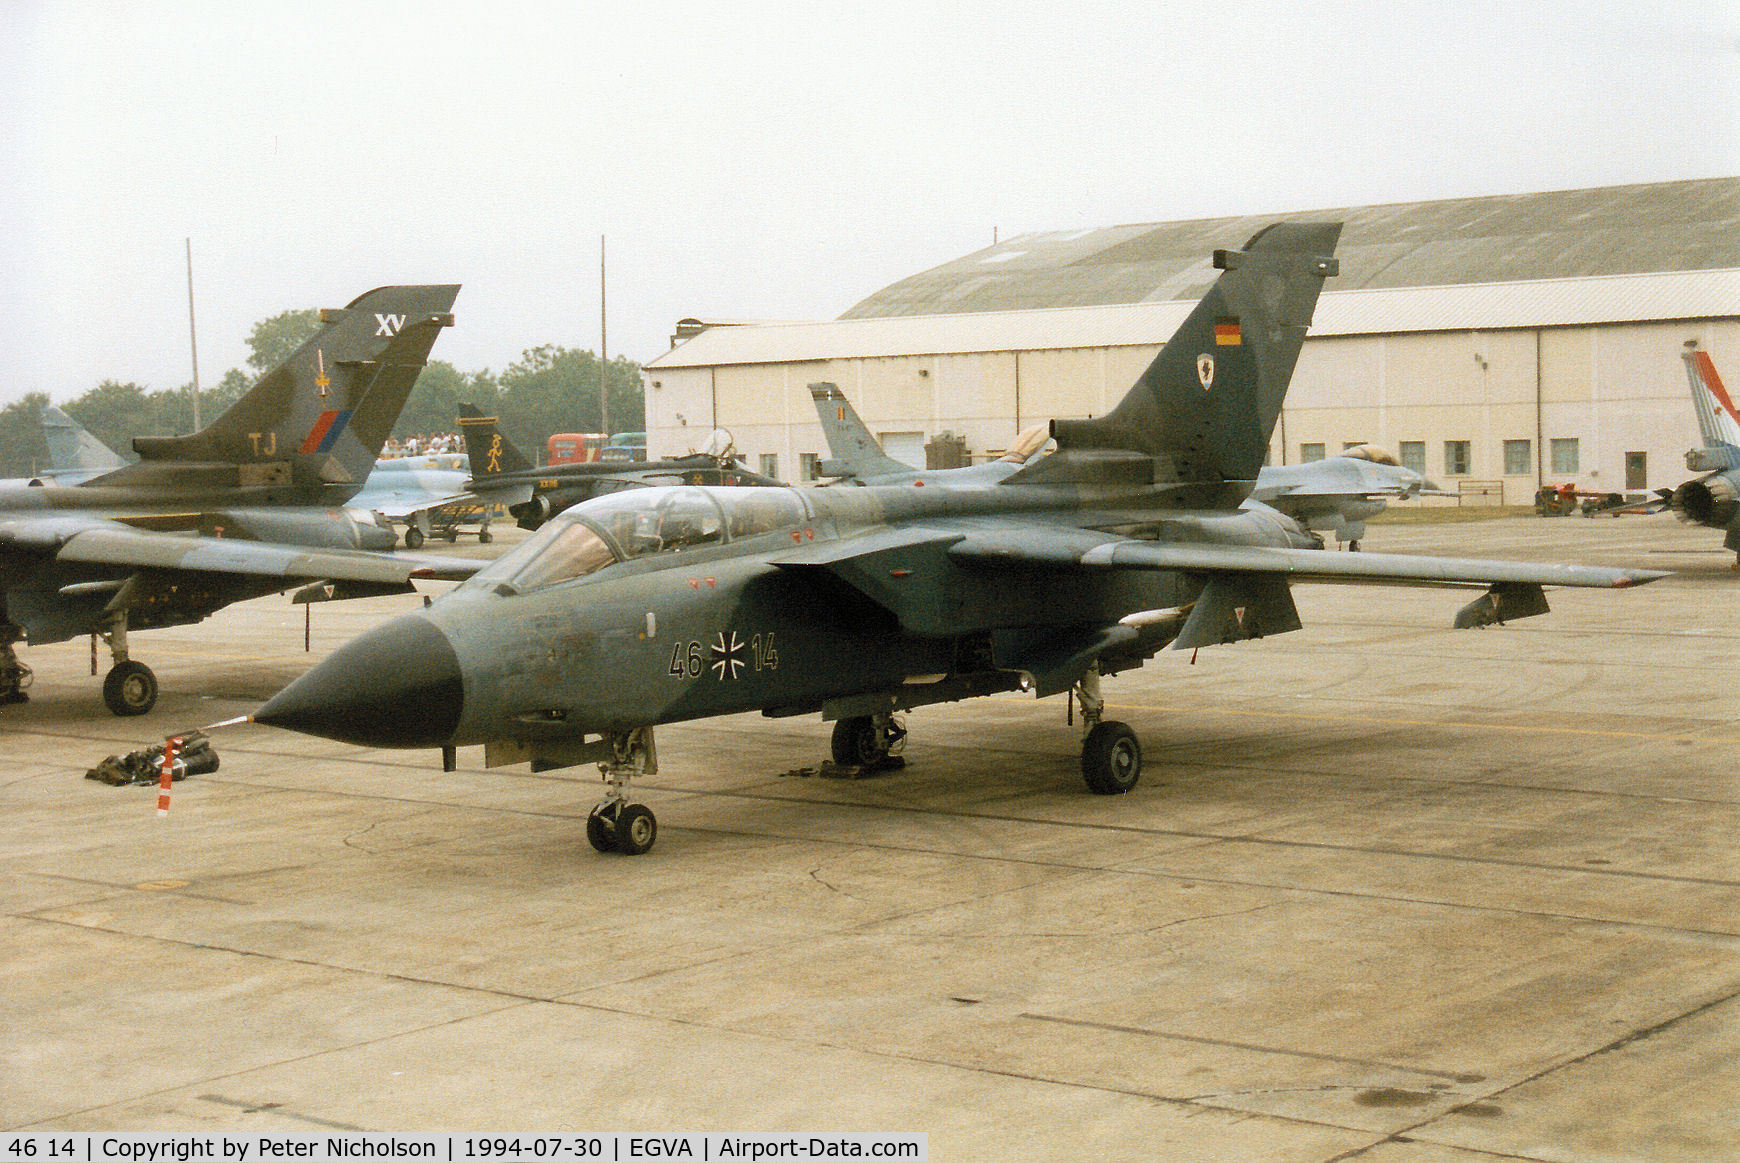 46 14, Panavia Tornado IDS C/N 776/GS247/4314, Tornado IDS, callsign German Navy 4675, of MFG-2 on the flight-line at the 1994 Intnl Air Tattoo at RAF Fairford.